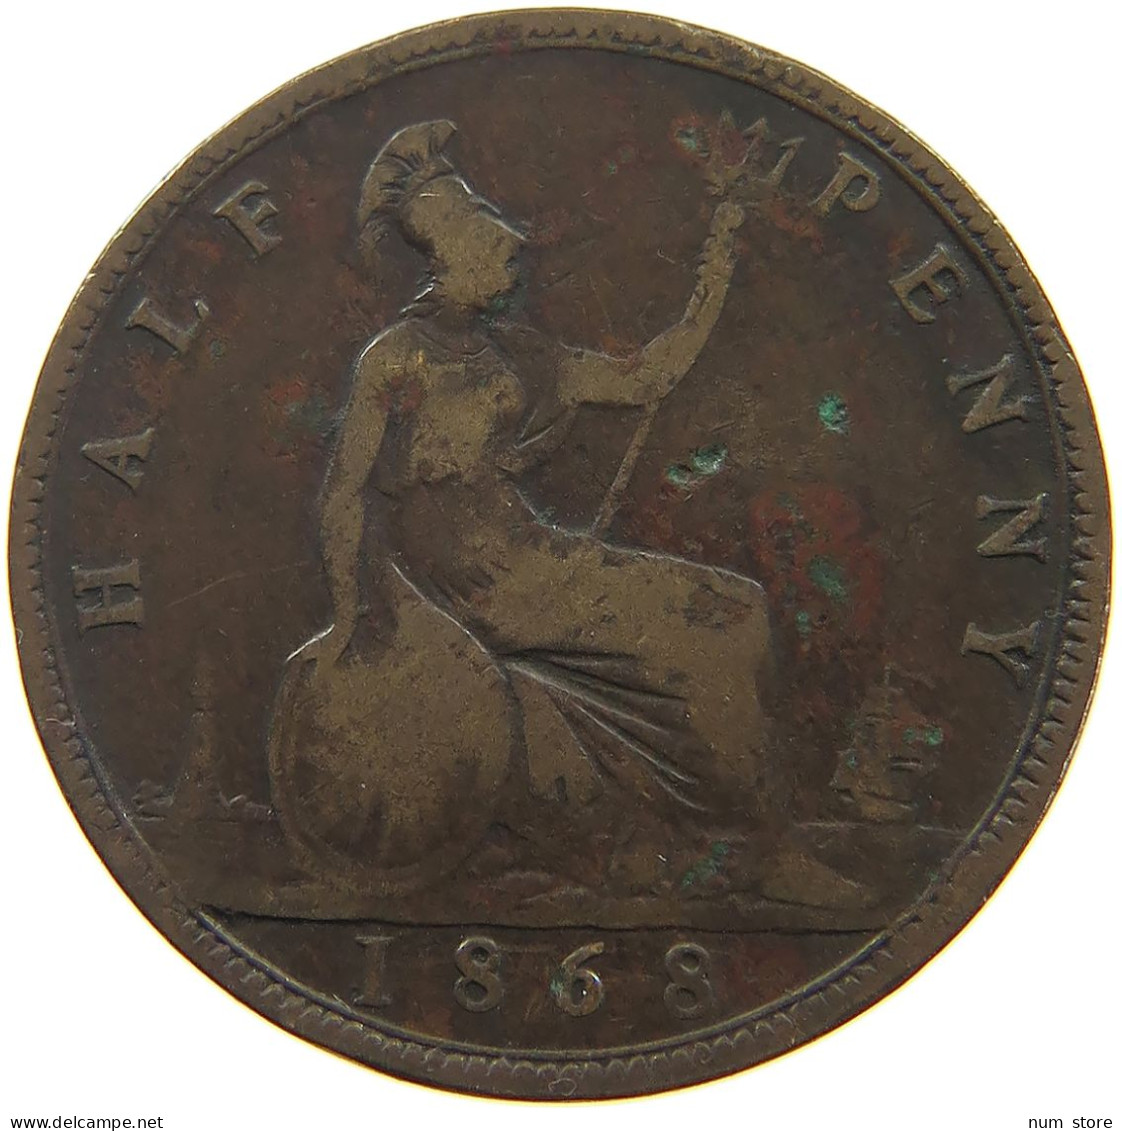 GREAT BRITAIN HALFPENNY 1868 Victoria 1837-1901 #s080 0001 - C. 1/2 Penny